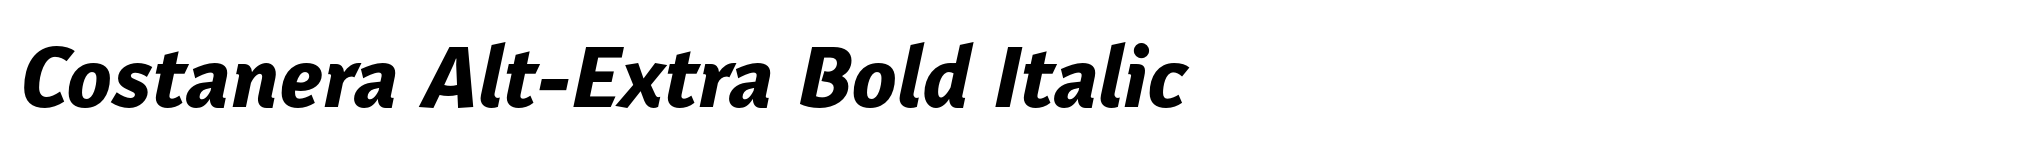 Costanera Alt-Extra Bold Italic image